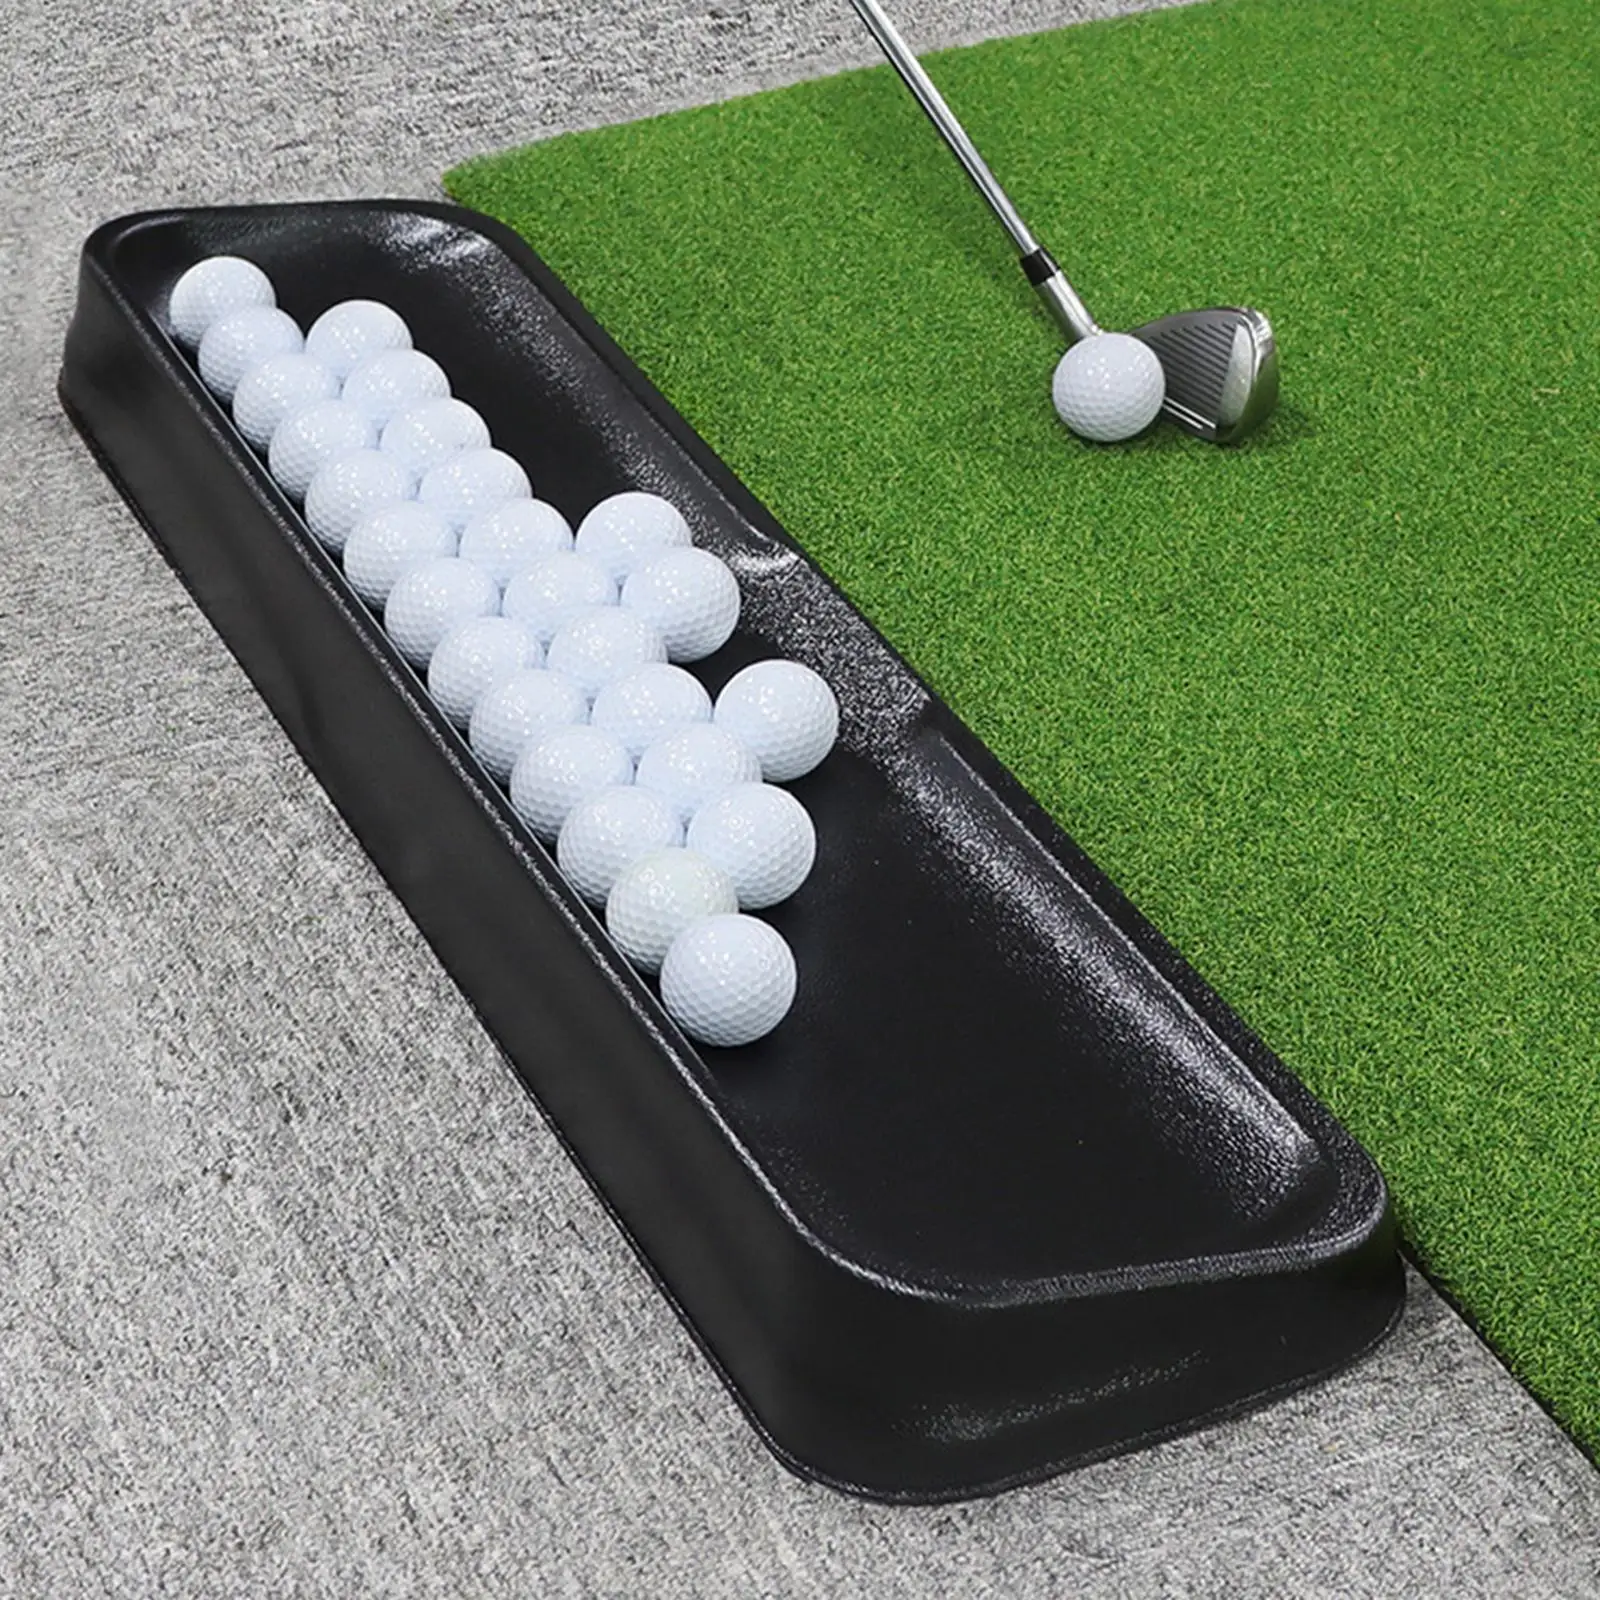 Heavy Duty Golf Ball Tray Unbreakable Durable Driving Range Organizers Storage Golf Ball Holder Range Practice Home